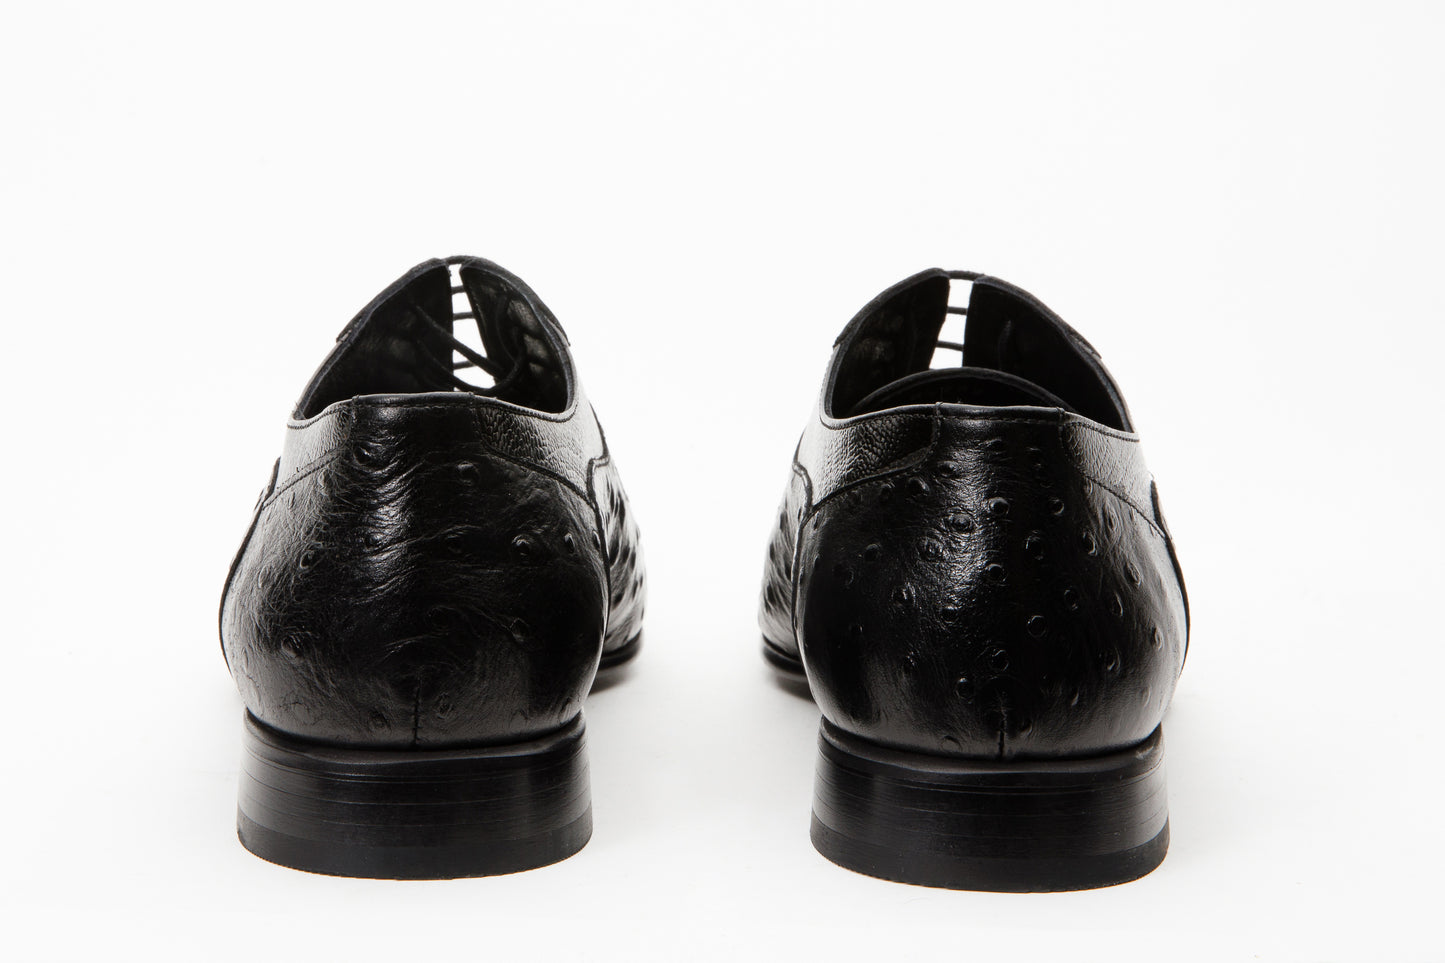 The Alabama Black Wingtip Oxford Men Shoe